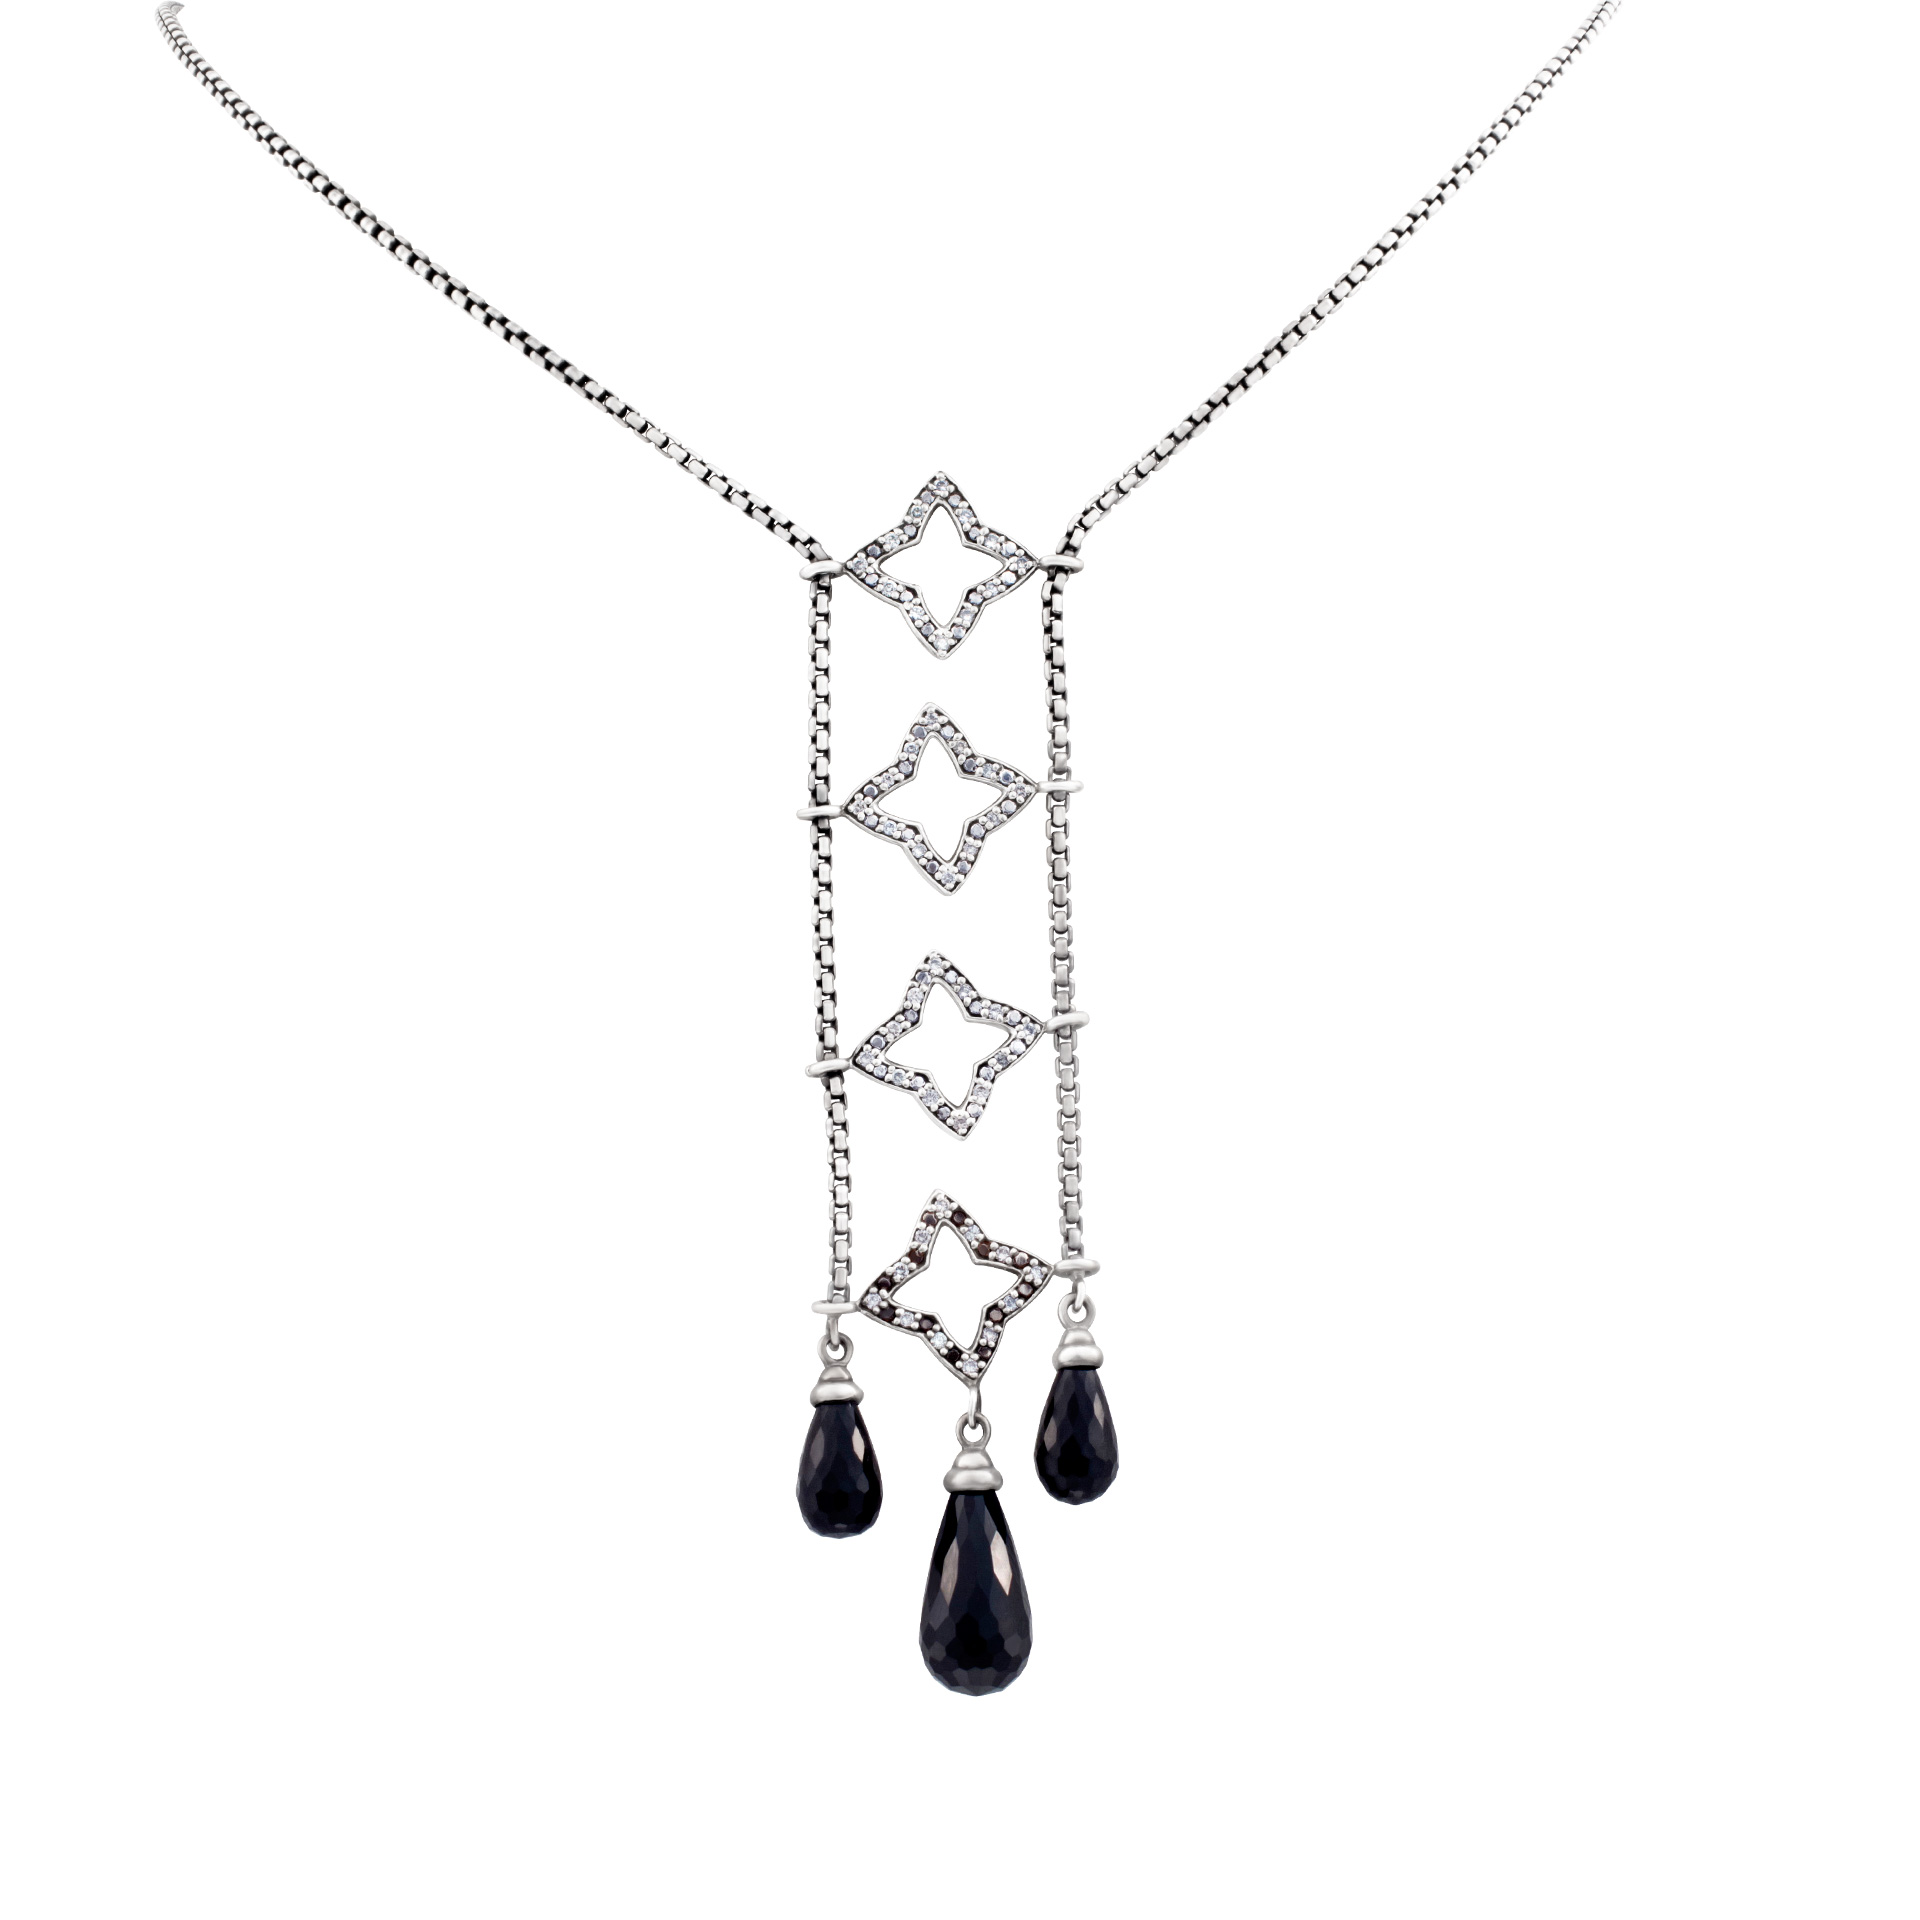 David Yurman necklace with diamond stars